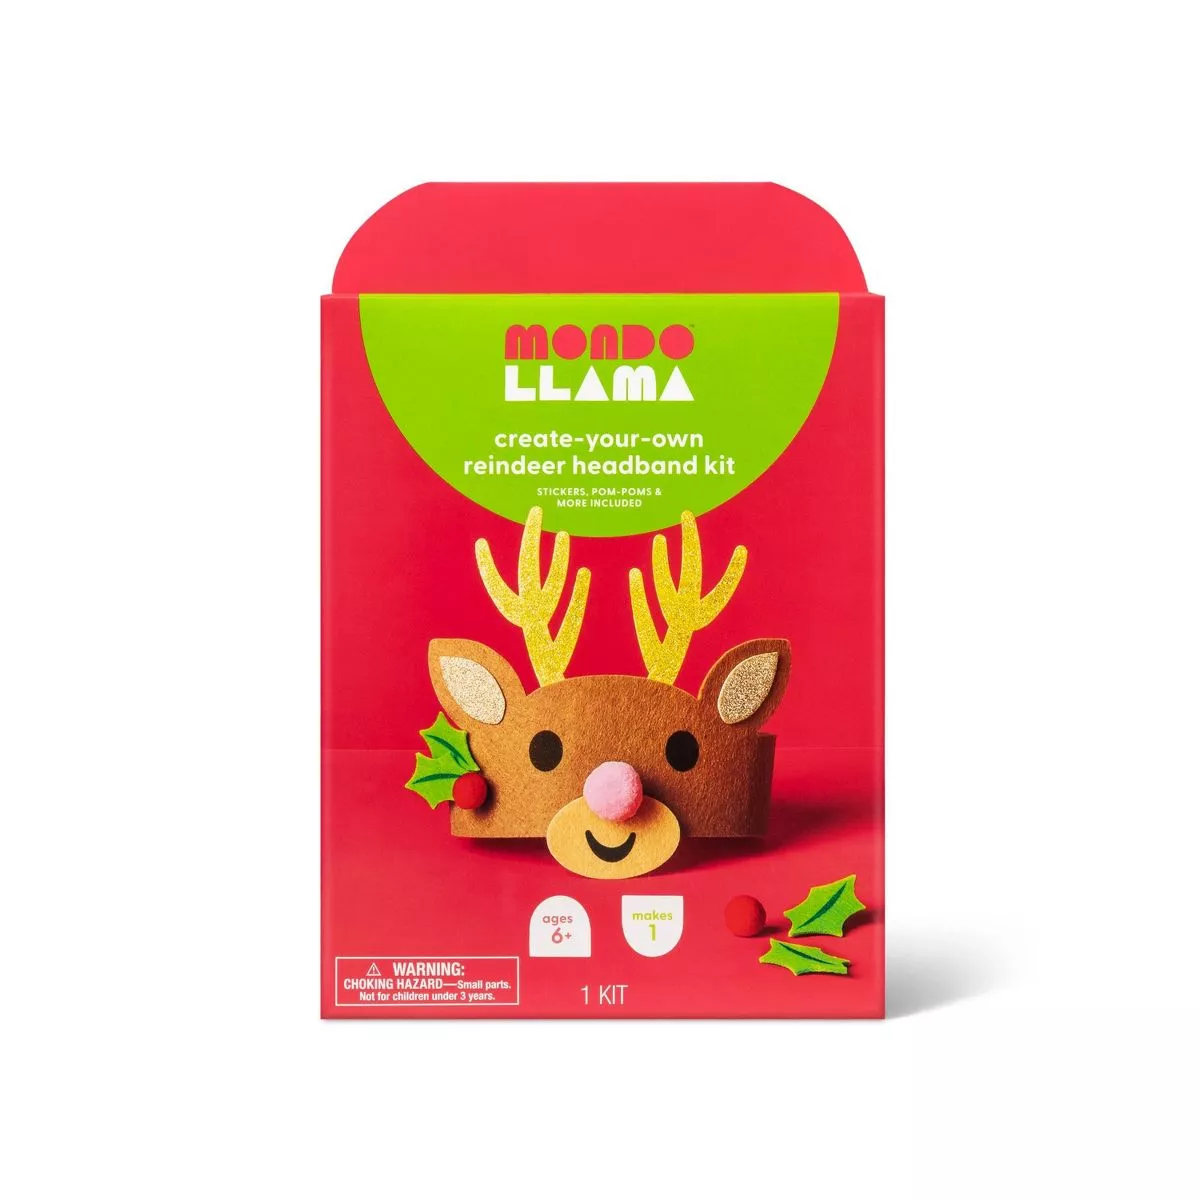 Llama Naturals curated on LTK